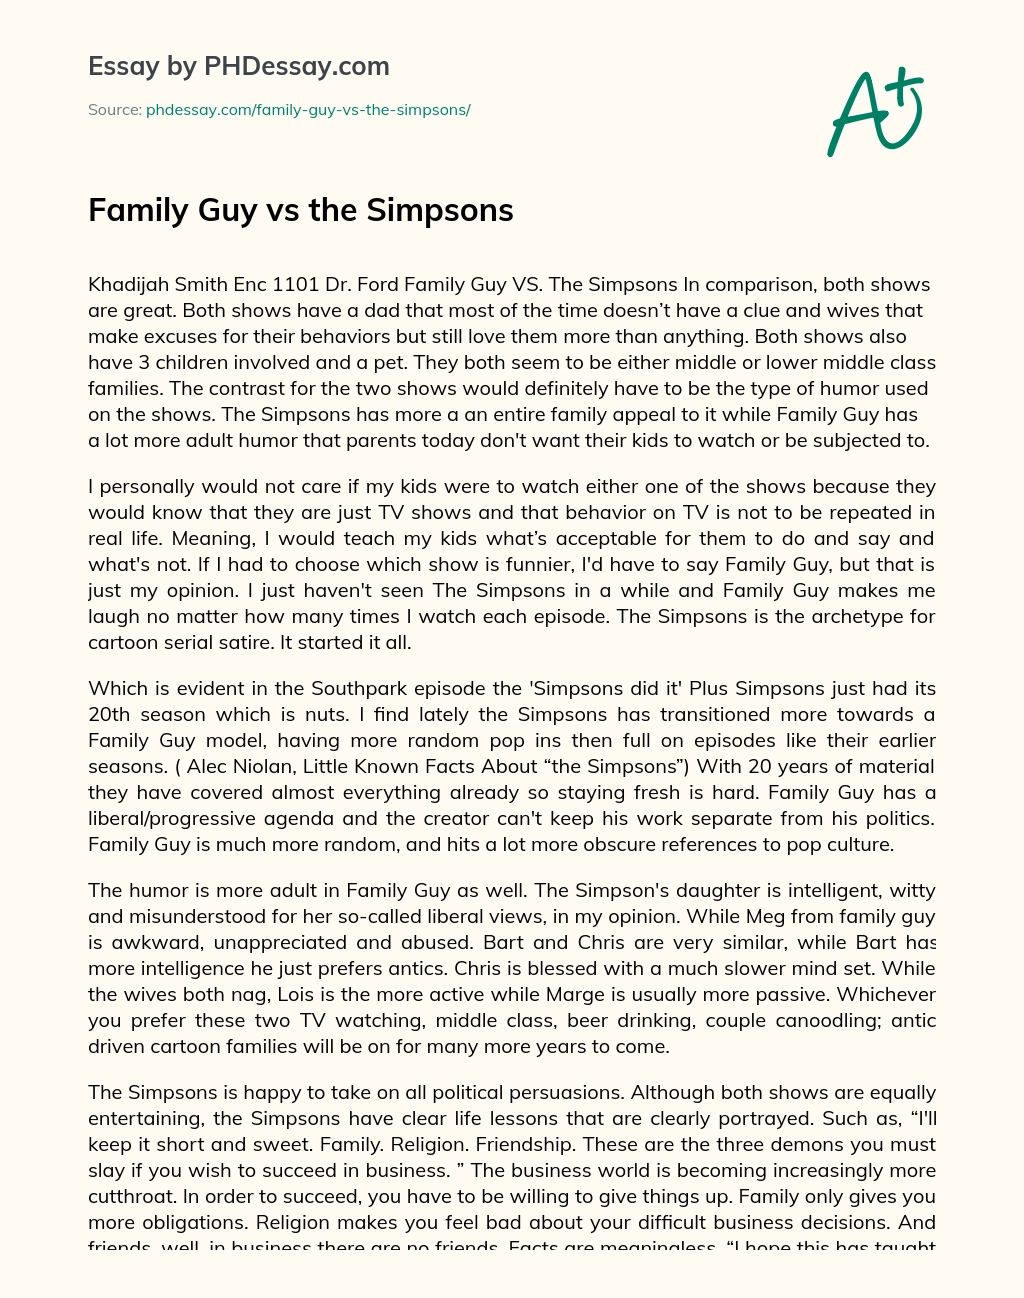 Family Guy vs the Simpsons essay